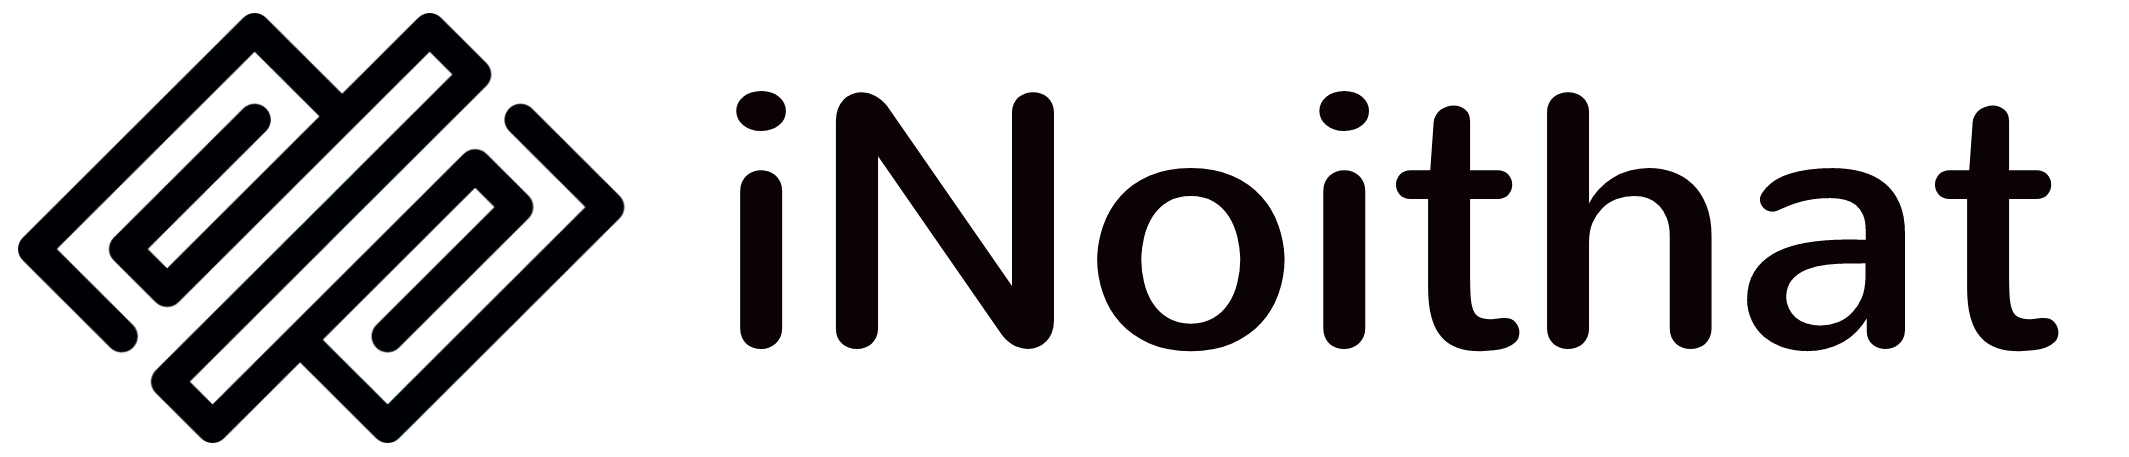 inoithat logo